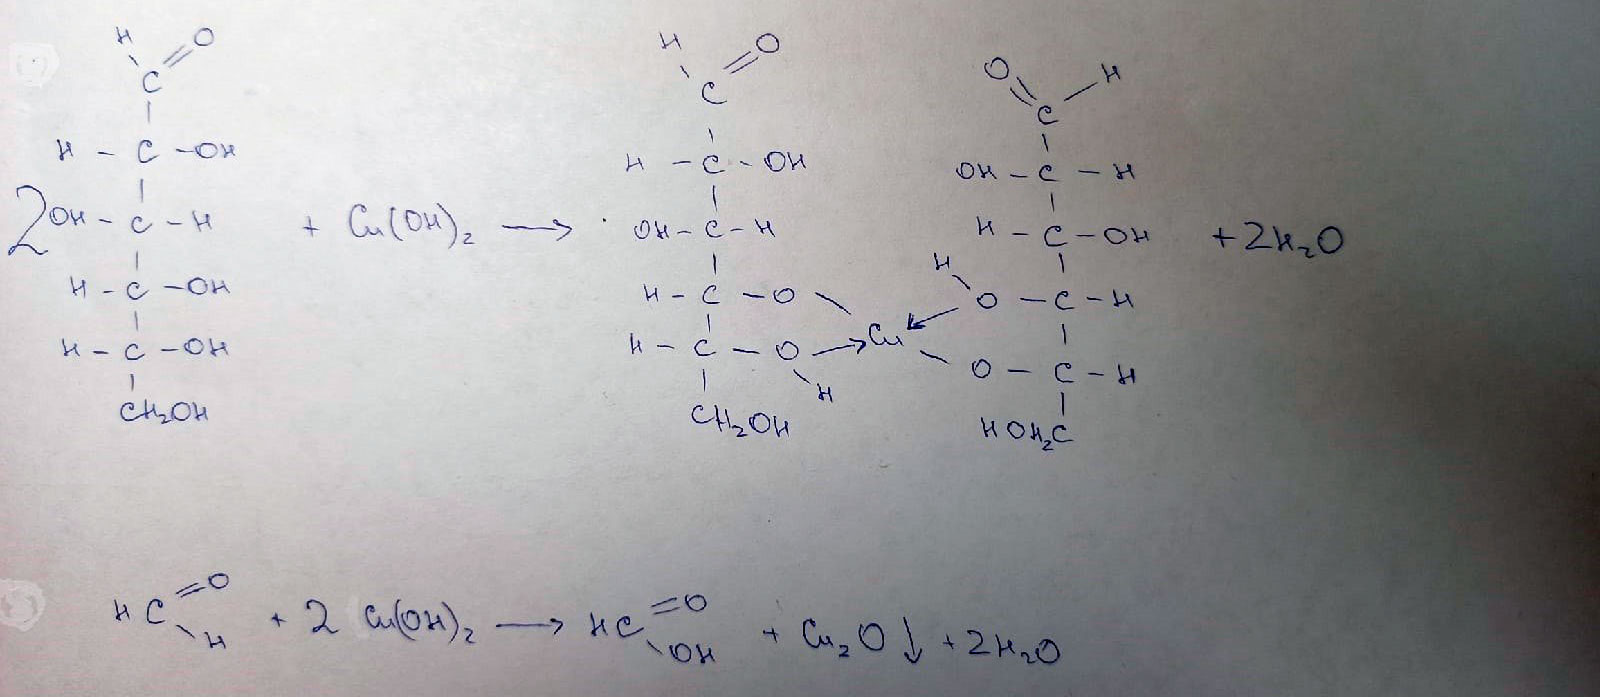 Кремний и гидроксид меди. Триолеат глицерина и гидроксид меди 2. Глицин с гидроксидом меди 2. Реакция глицерина с гидроксидом меди 2. Глюкоза и гидроксид меди 2.